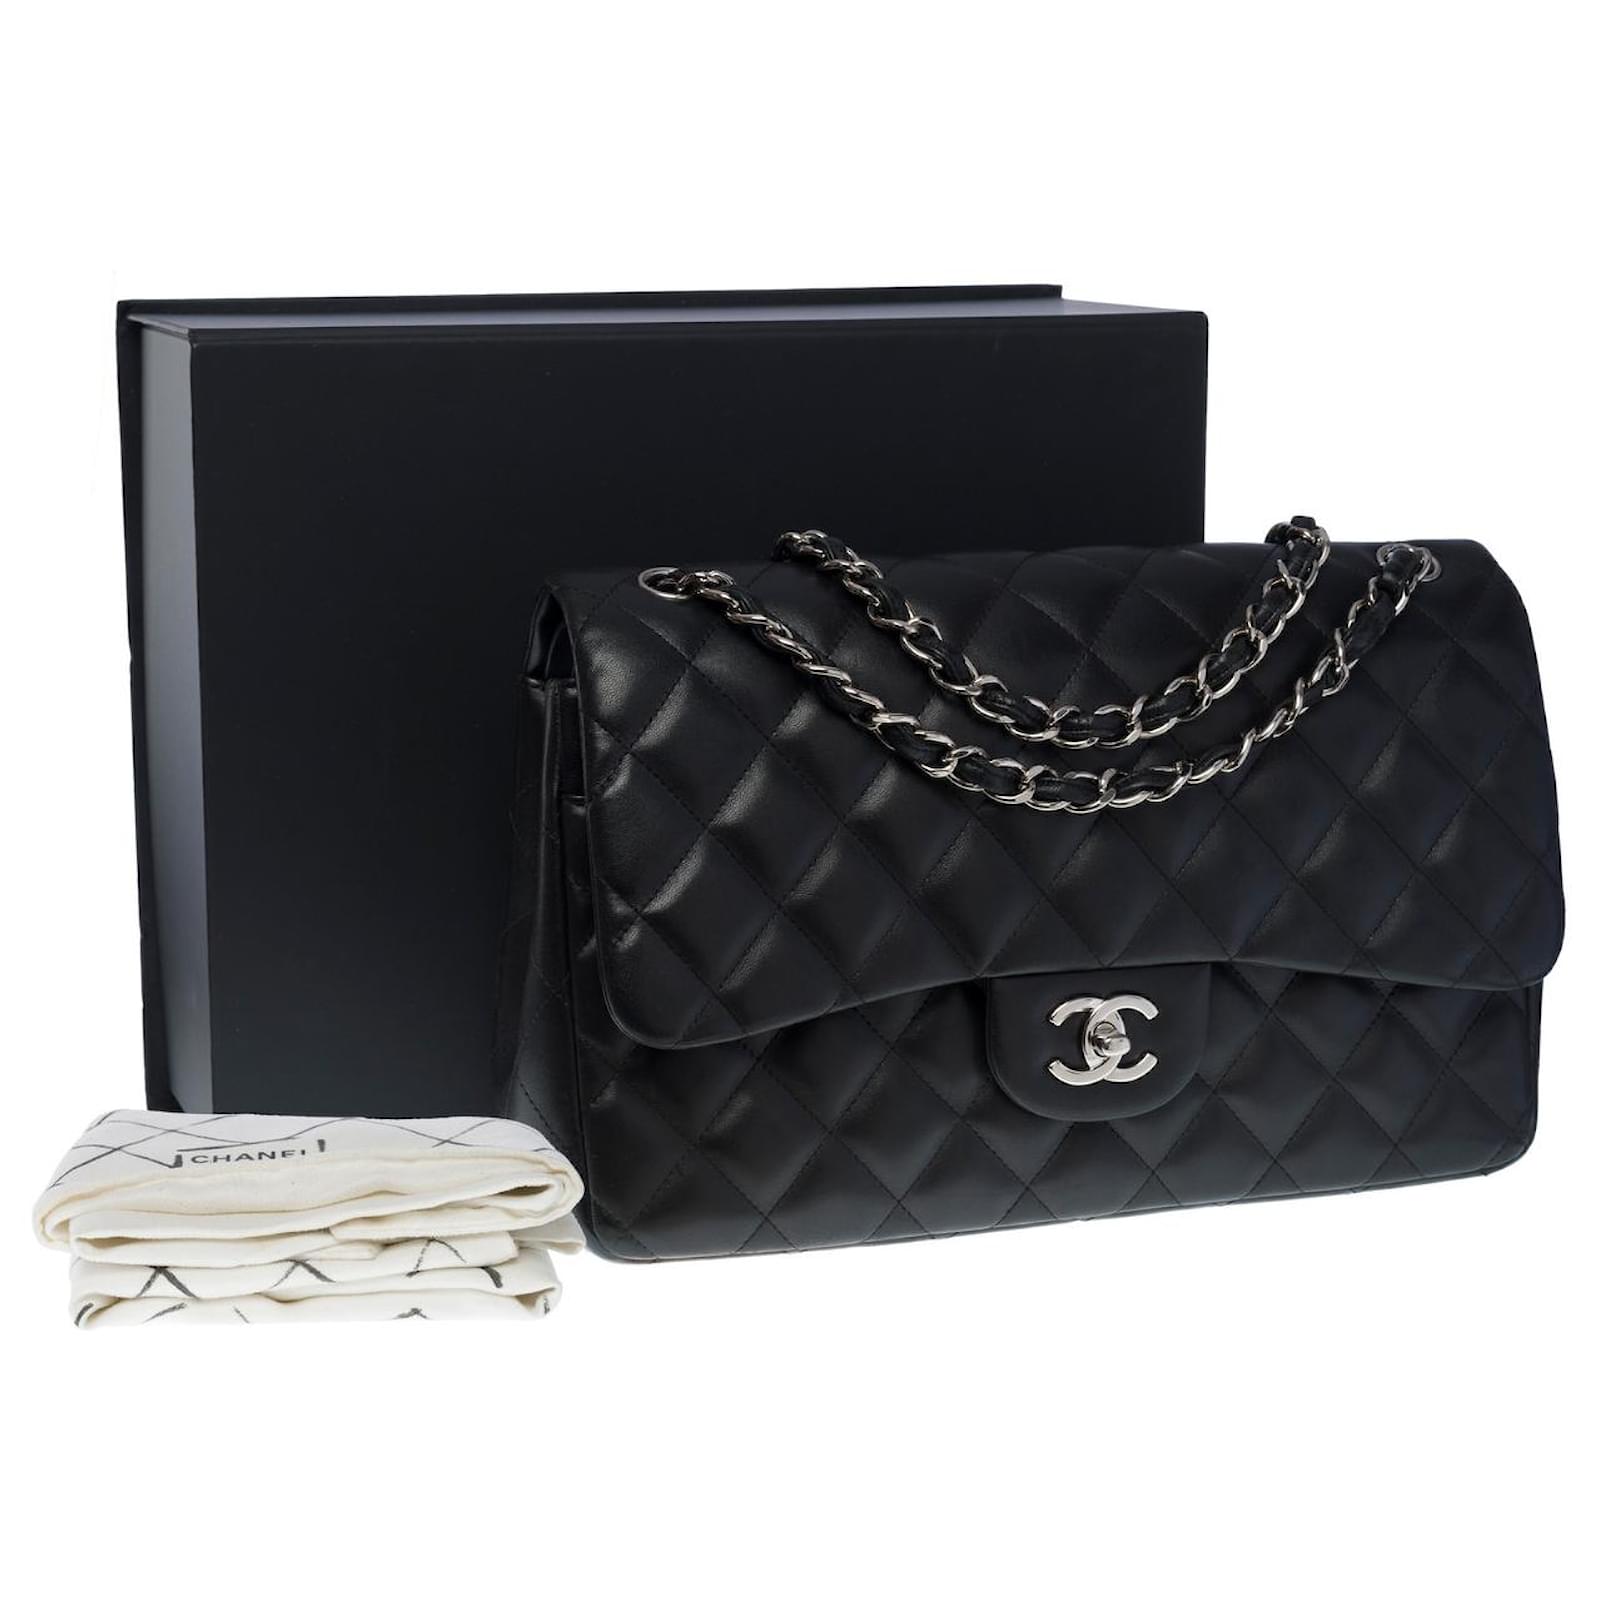 Handbags Chanel Sac Chanel Timeless/Classic Black Leather - 101074